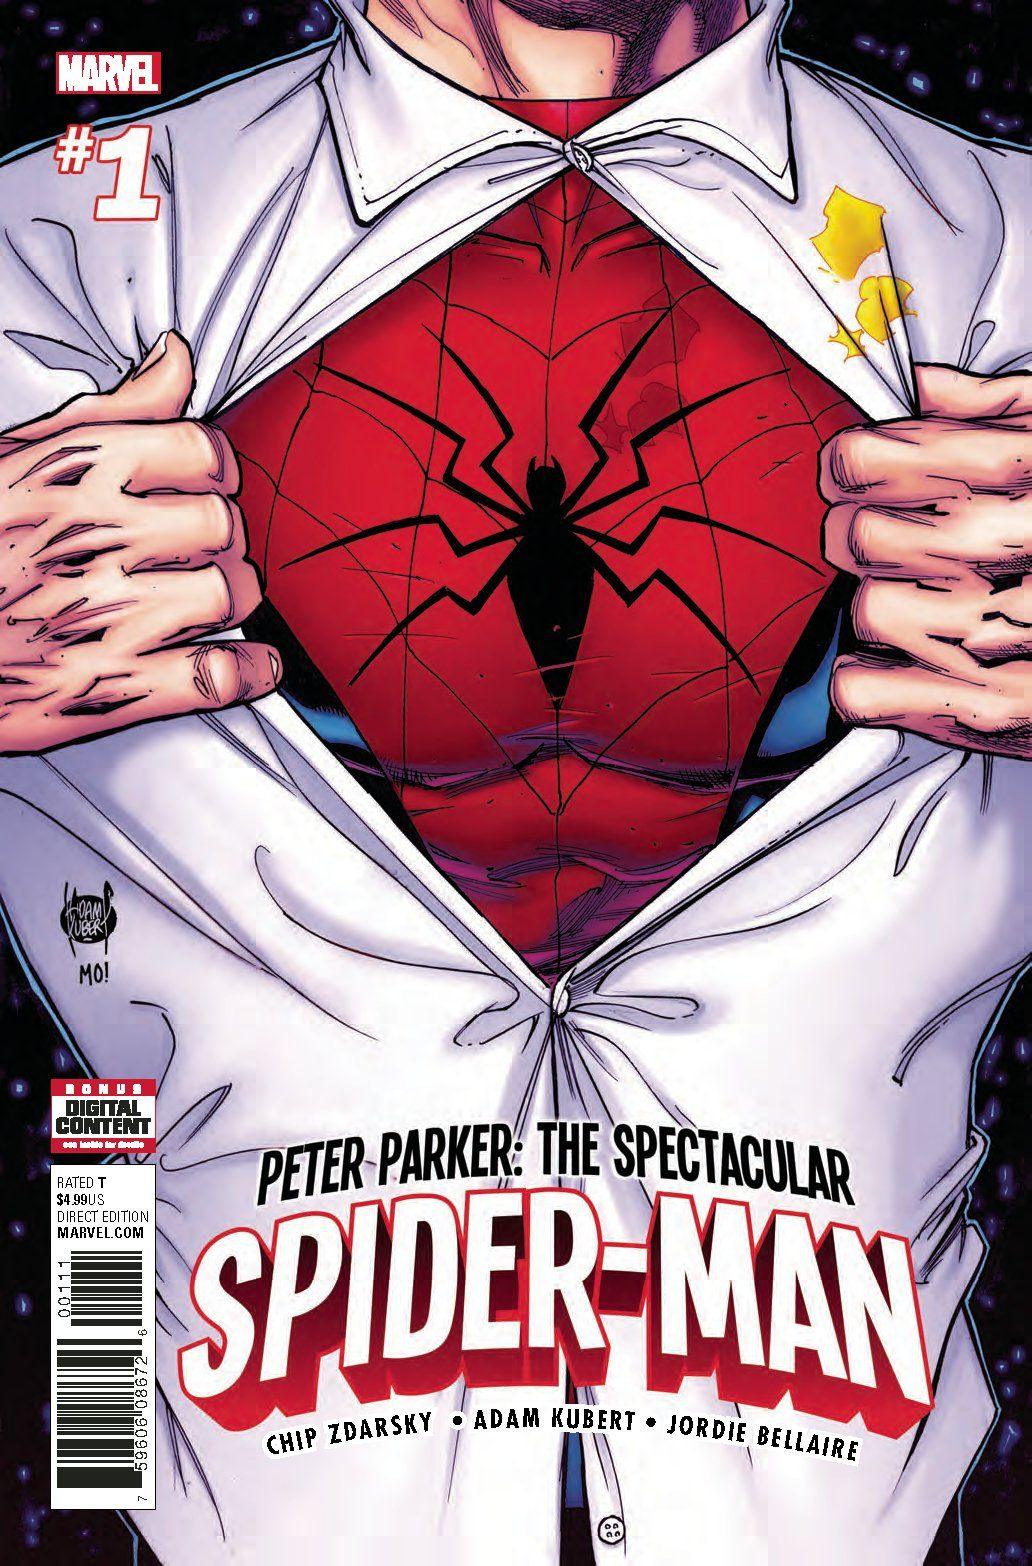 PETER PARKER SPECTACULAR SPIDER-MAN #1 - PCKComics.com